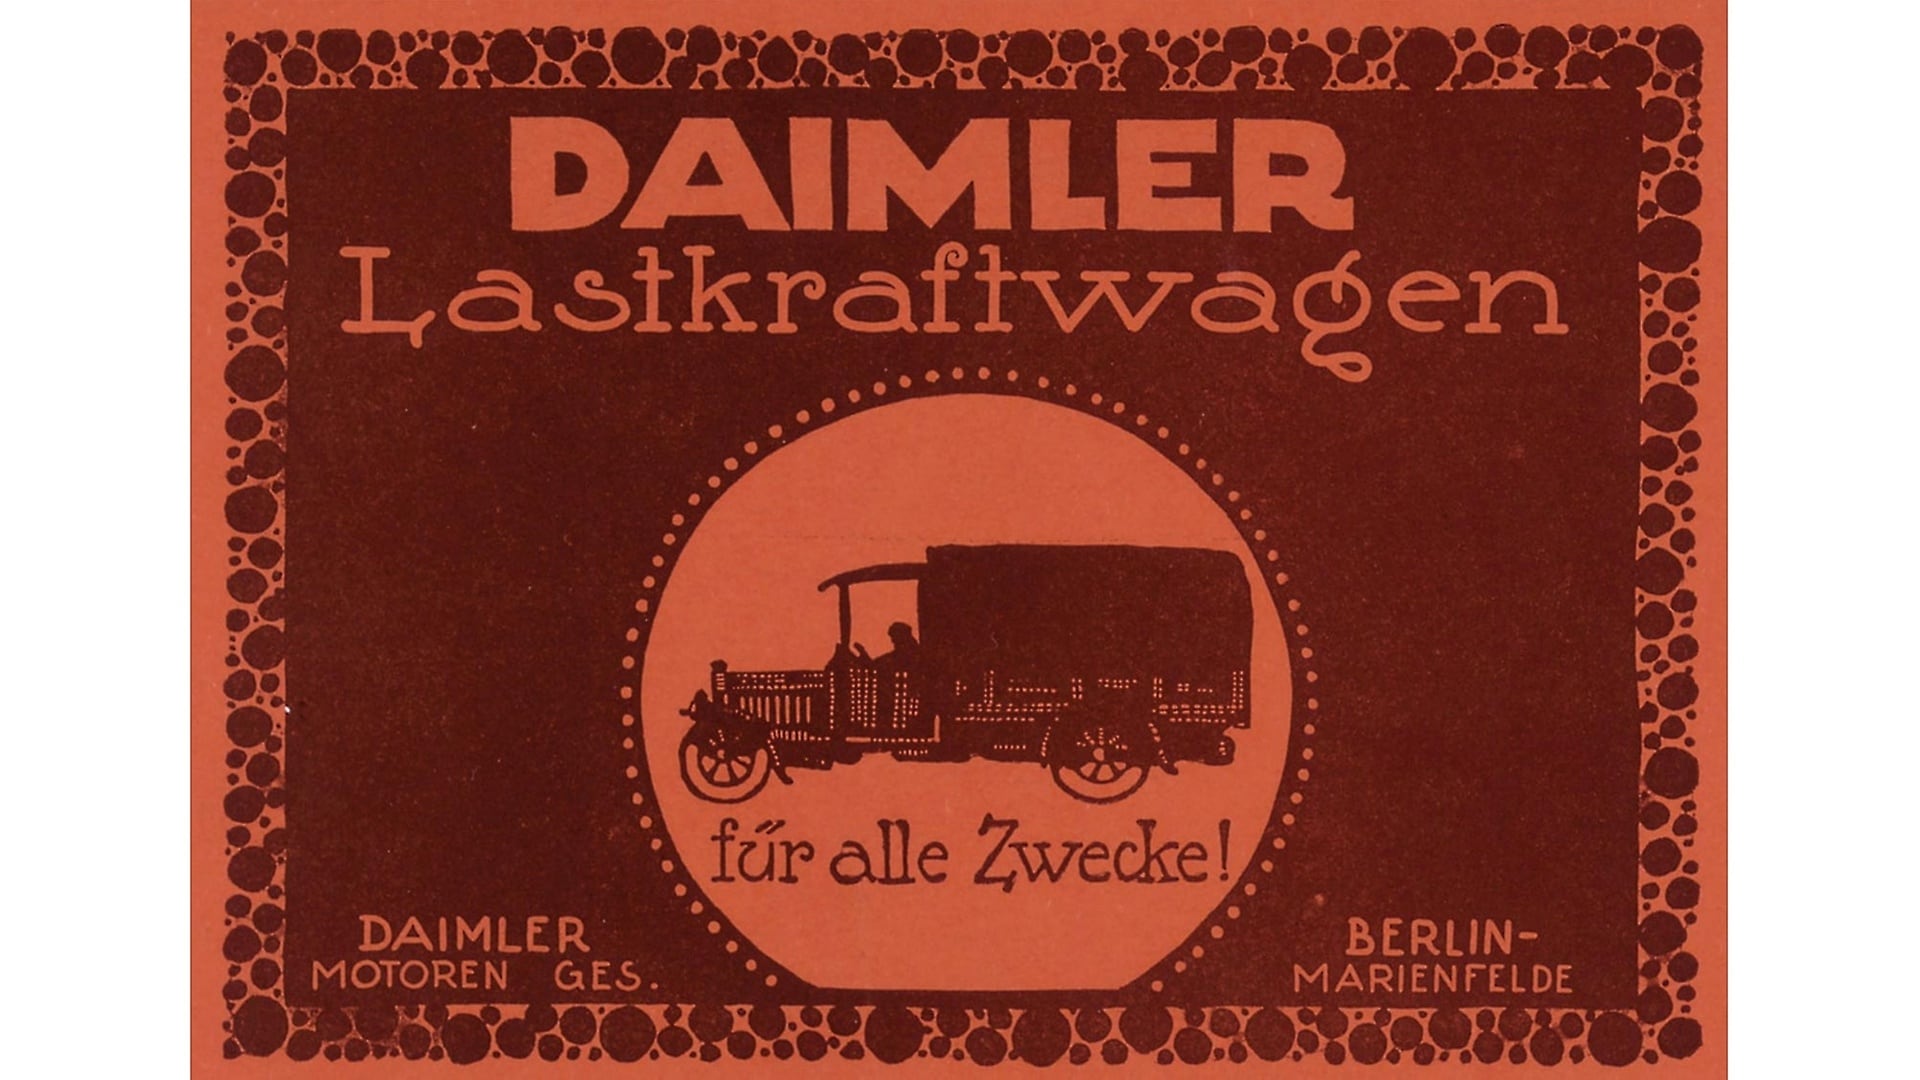 Daimler-Motoren-Gesellschaft advertisement: "Daimler trucks for all purposes!", published in 1914.